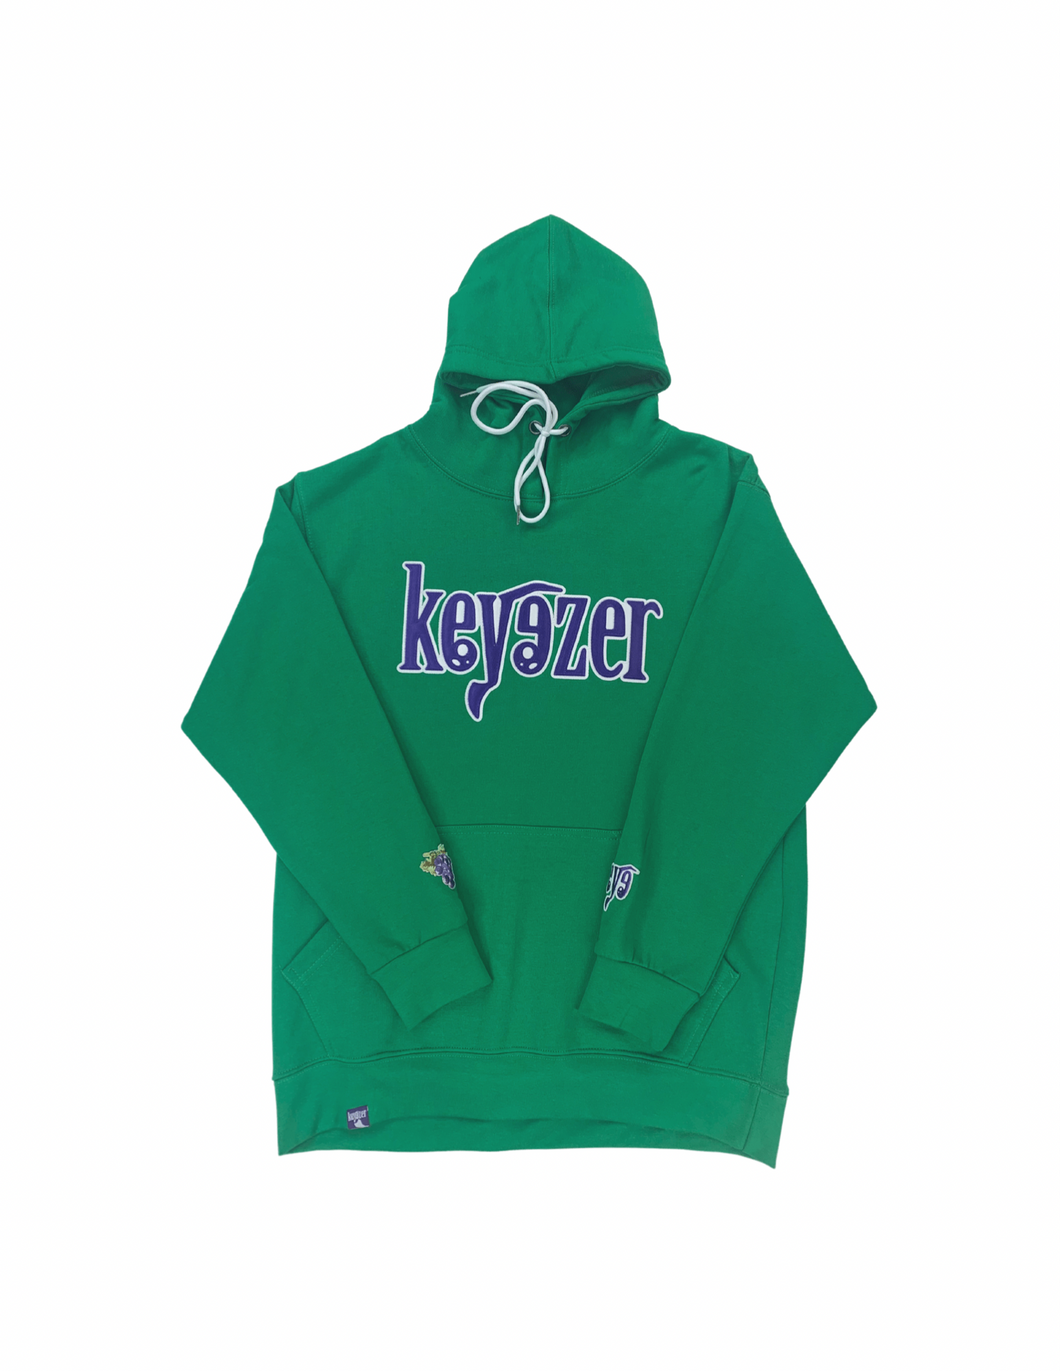 Keyezer Classic “Grape” Hoodie